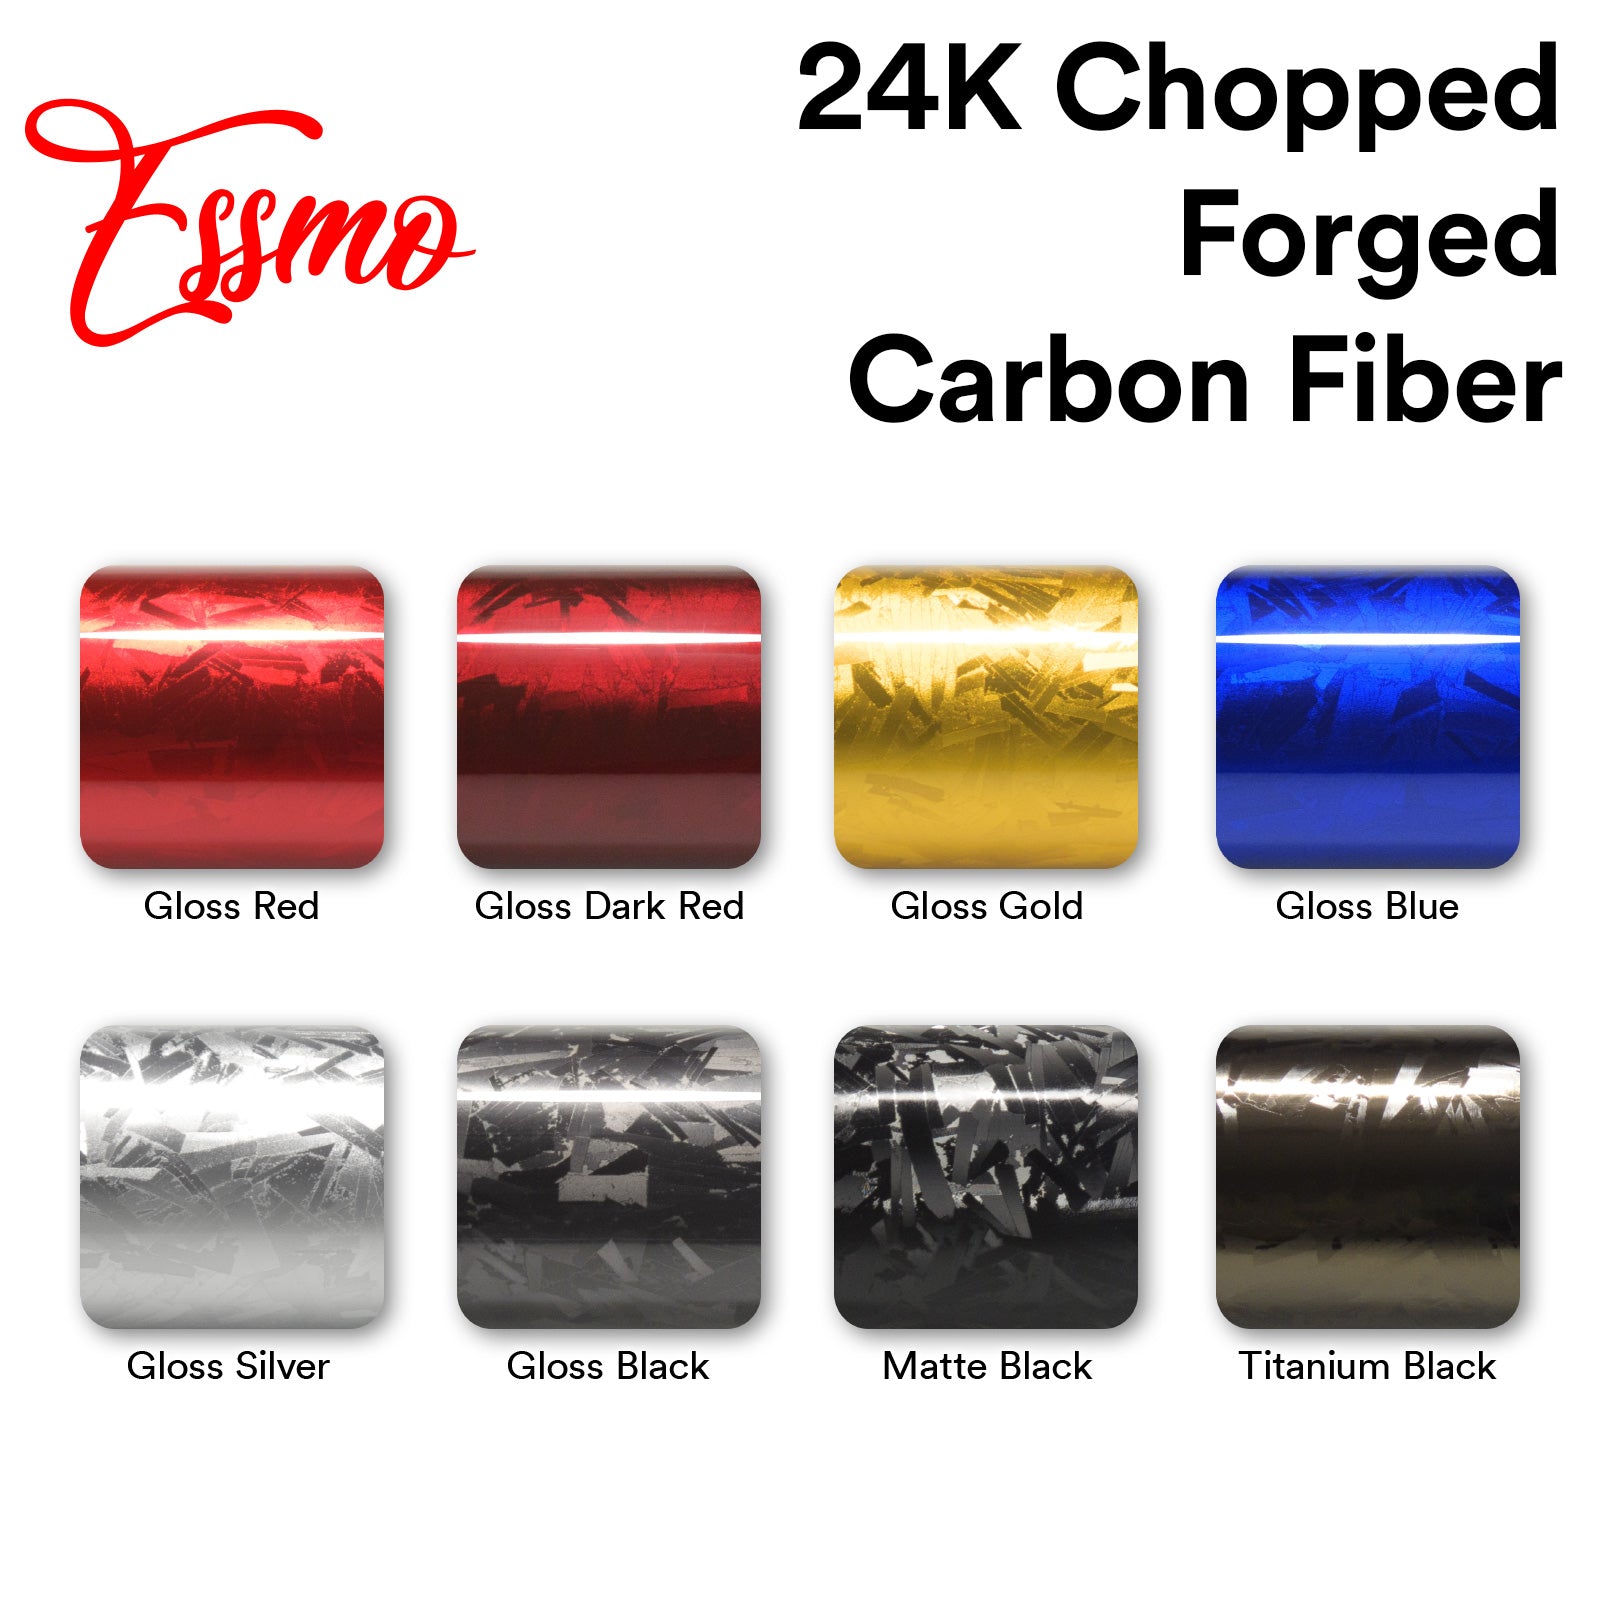 24K Chopped Forged Carbon Fiber Gloss Silver Vinyl Wrap